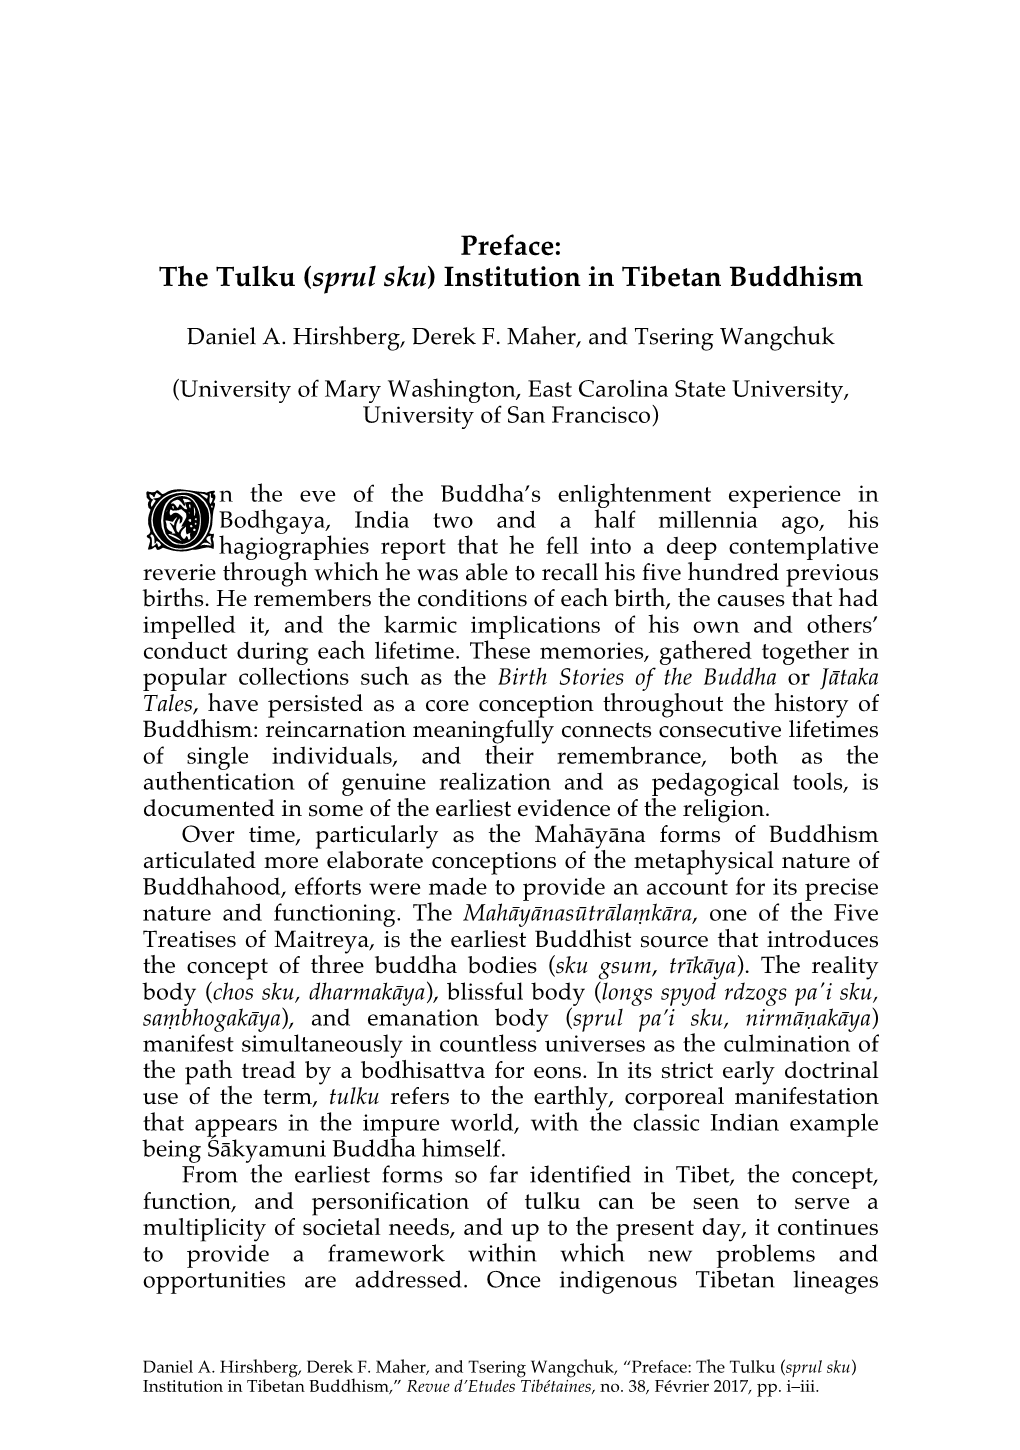 Preface: the Tulku (Sprul Sku) Institution in Tibetan Buddhism